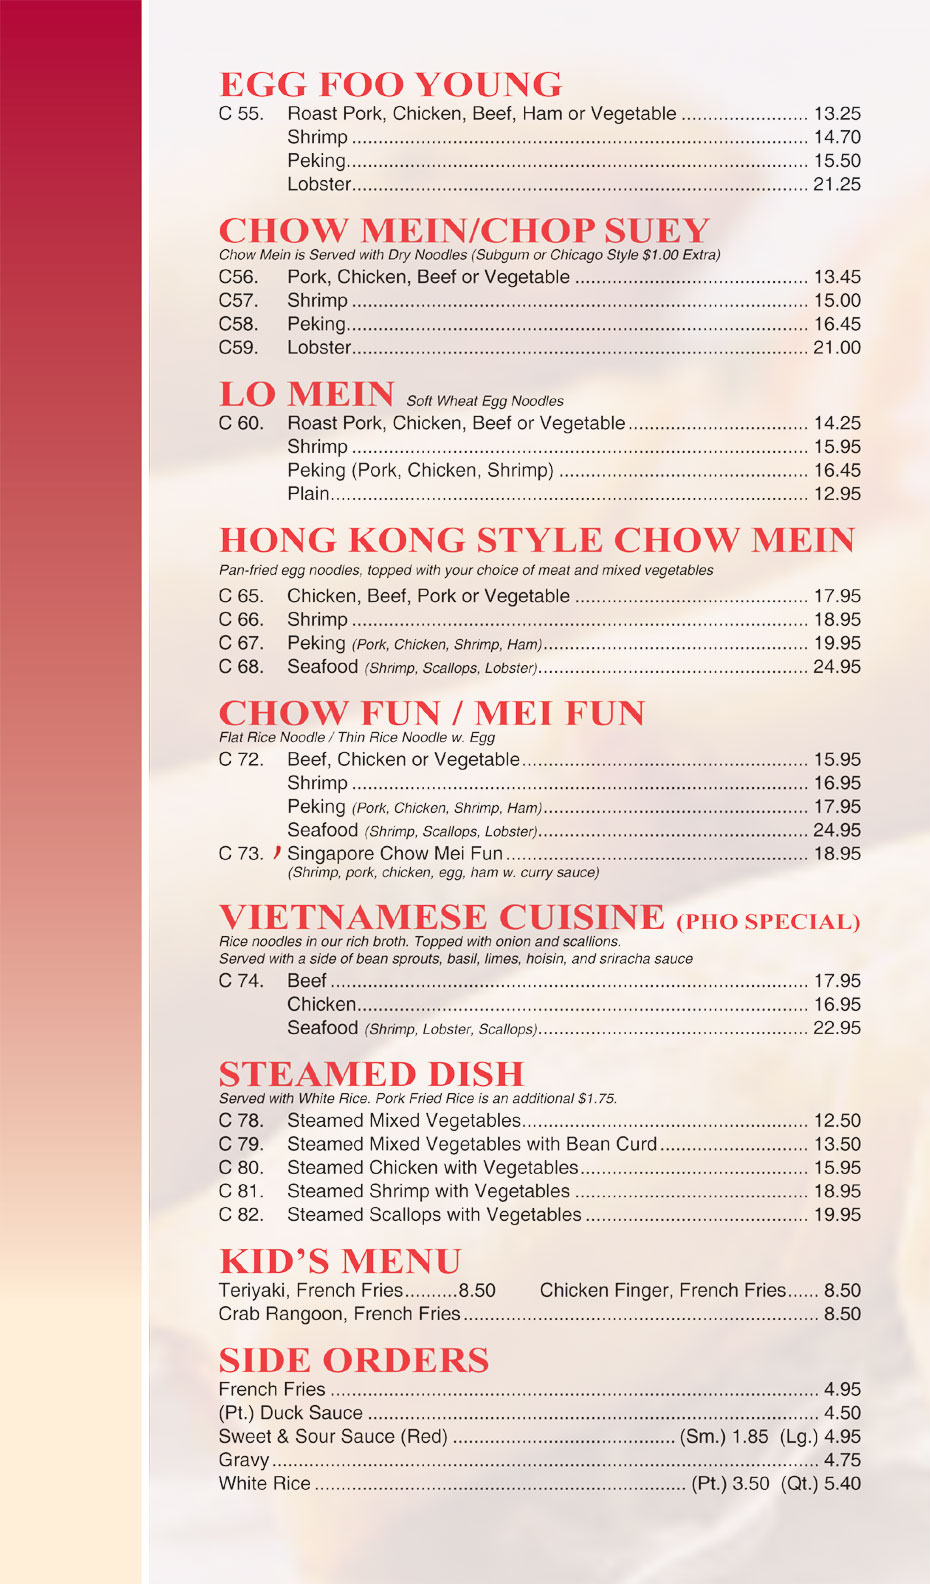 Egg Foo Young - Chow Mein / Chop Suey - Lo Mein - Hong Kong Style Chow Mein - Chow Fun / Mei Fun
Vietnamese Cuisine (Pho Special) - Steamed Dish - Kids Menu - Side Orders